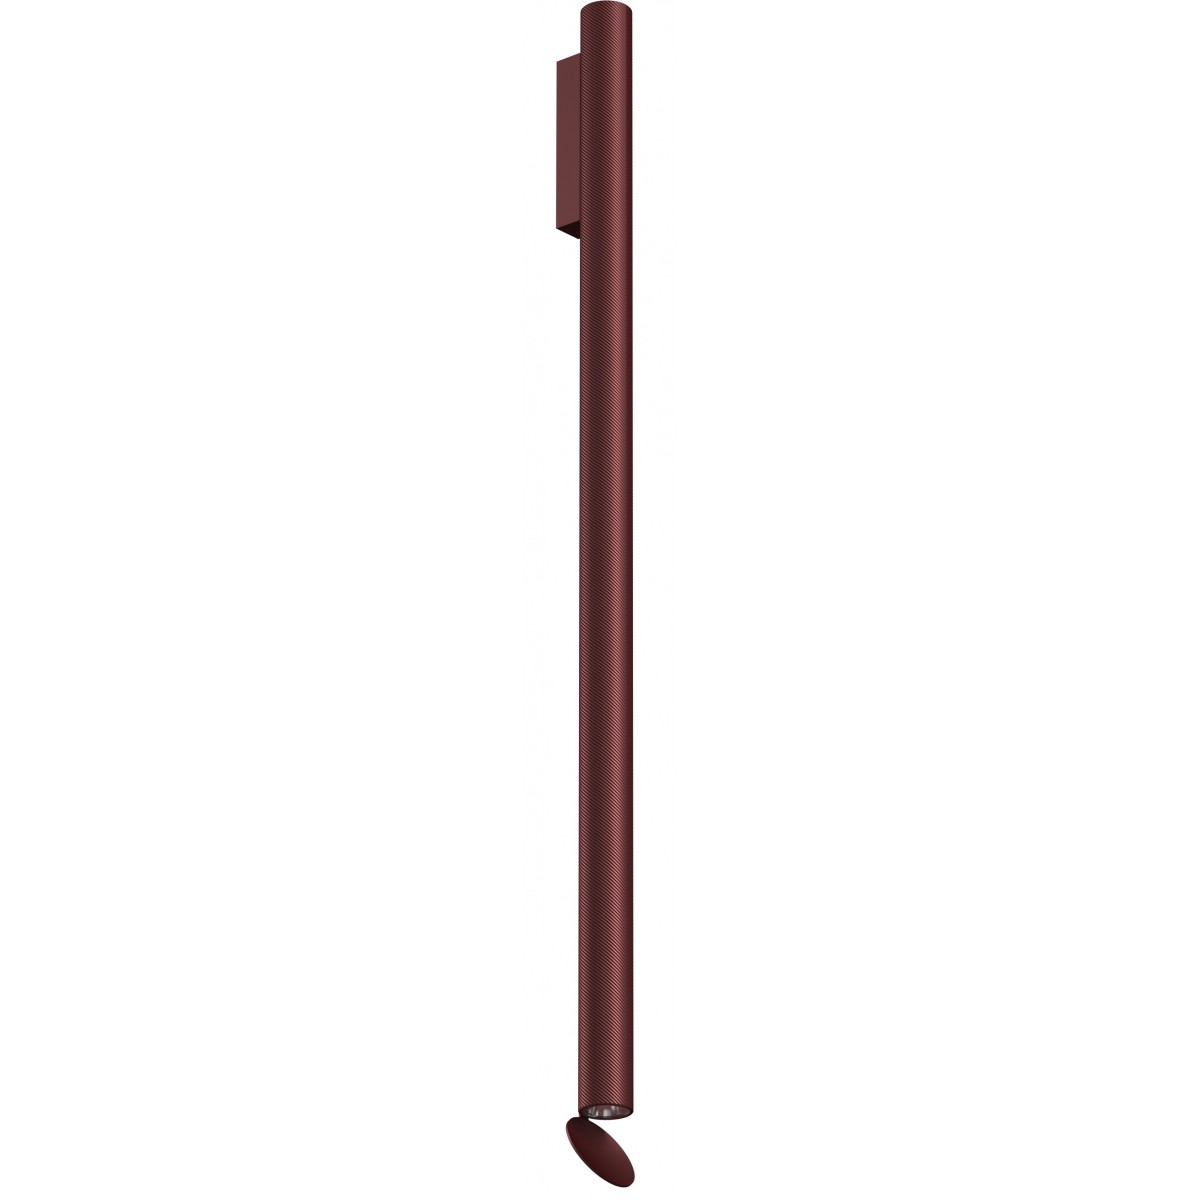 Flauta H100cm – Spiga, anodized ruby red